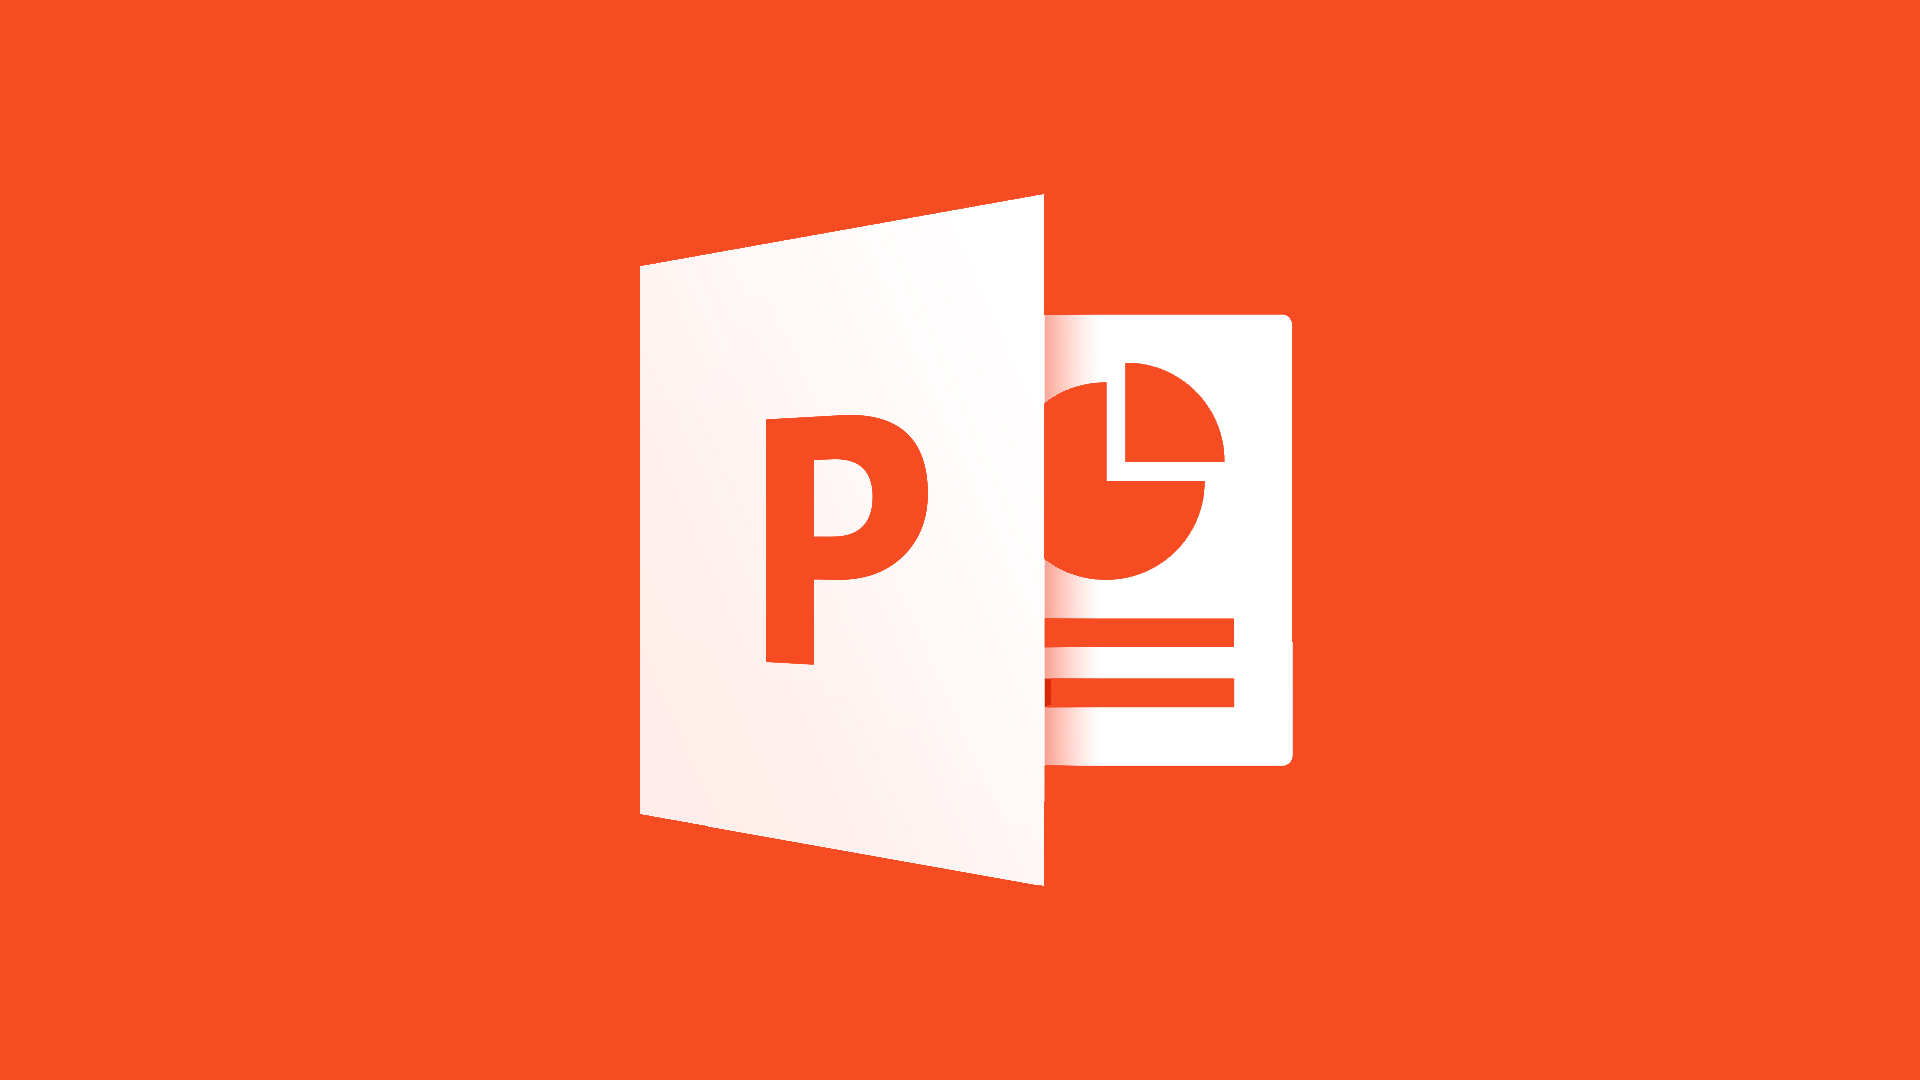 Проверить поинт. Значок MS POWERPOINT. Логотип Microsoft Office POWERPOINT. Ярлык повер поинт. Иконки для повер Пойнт.